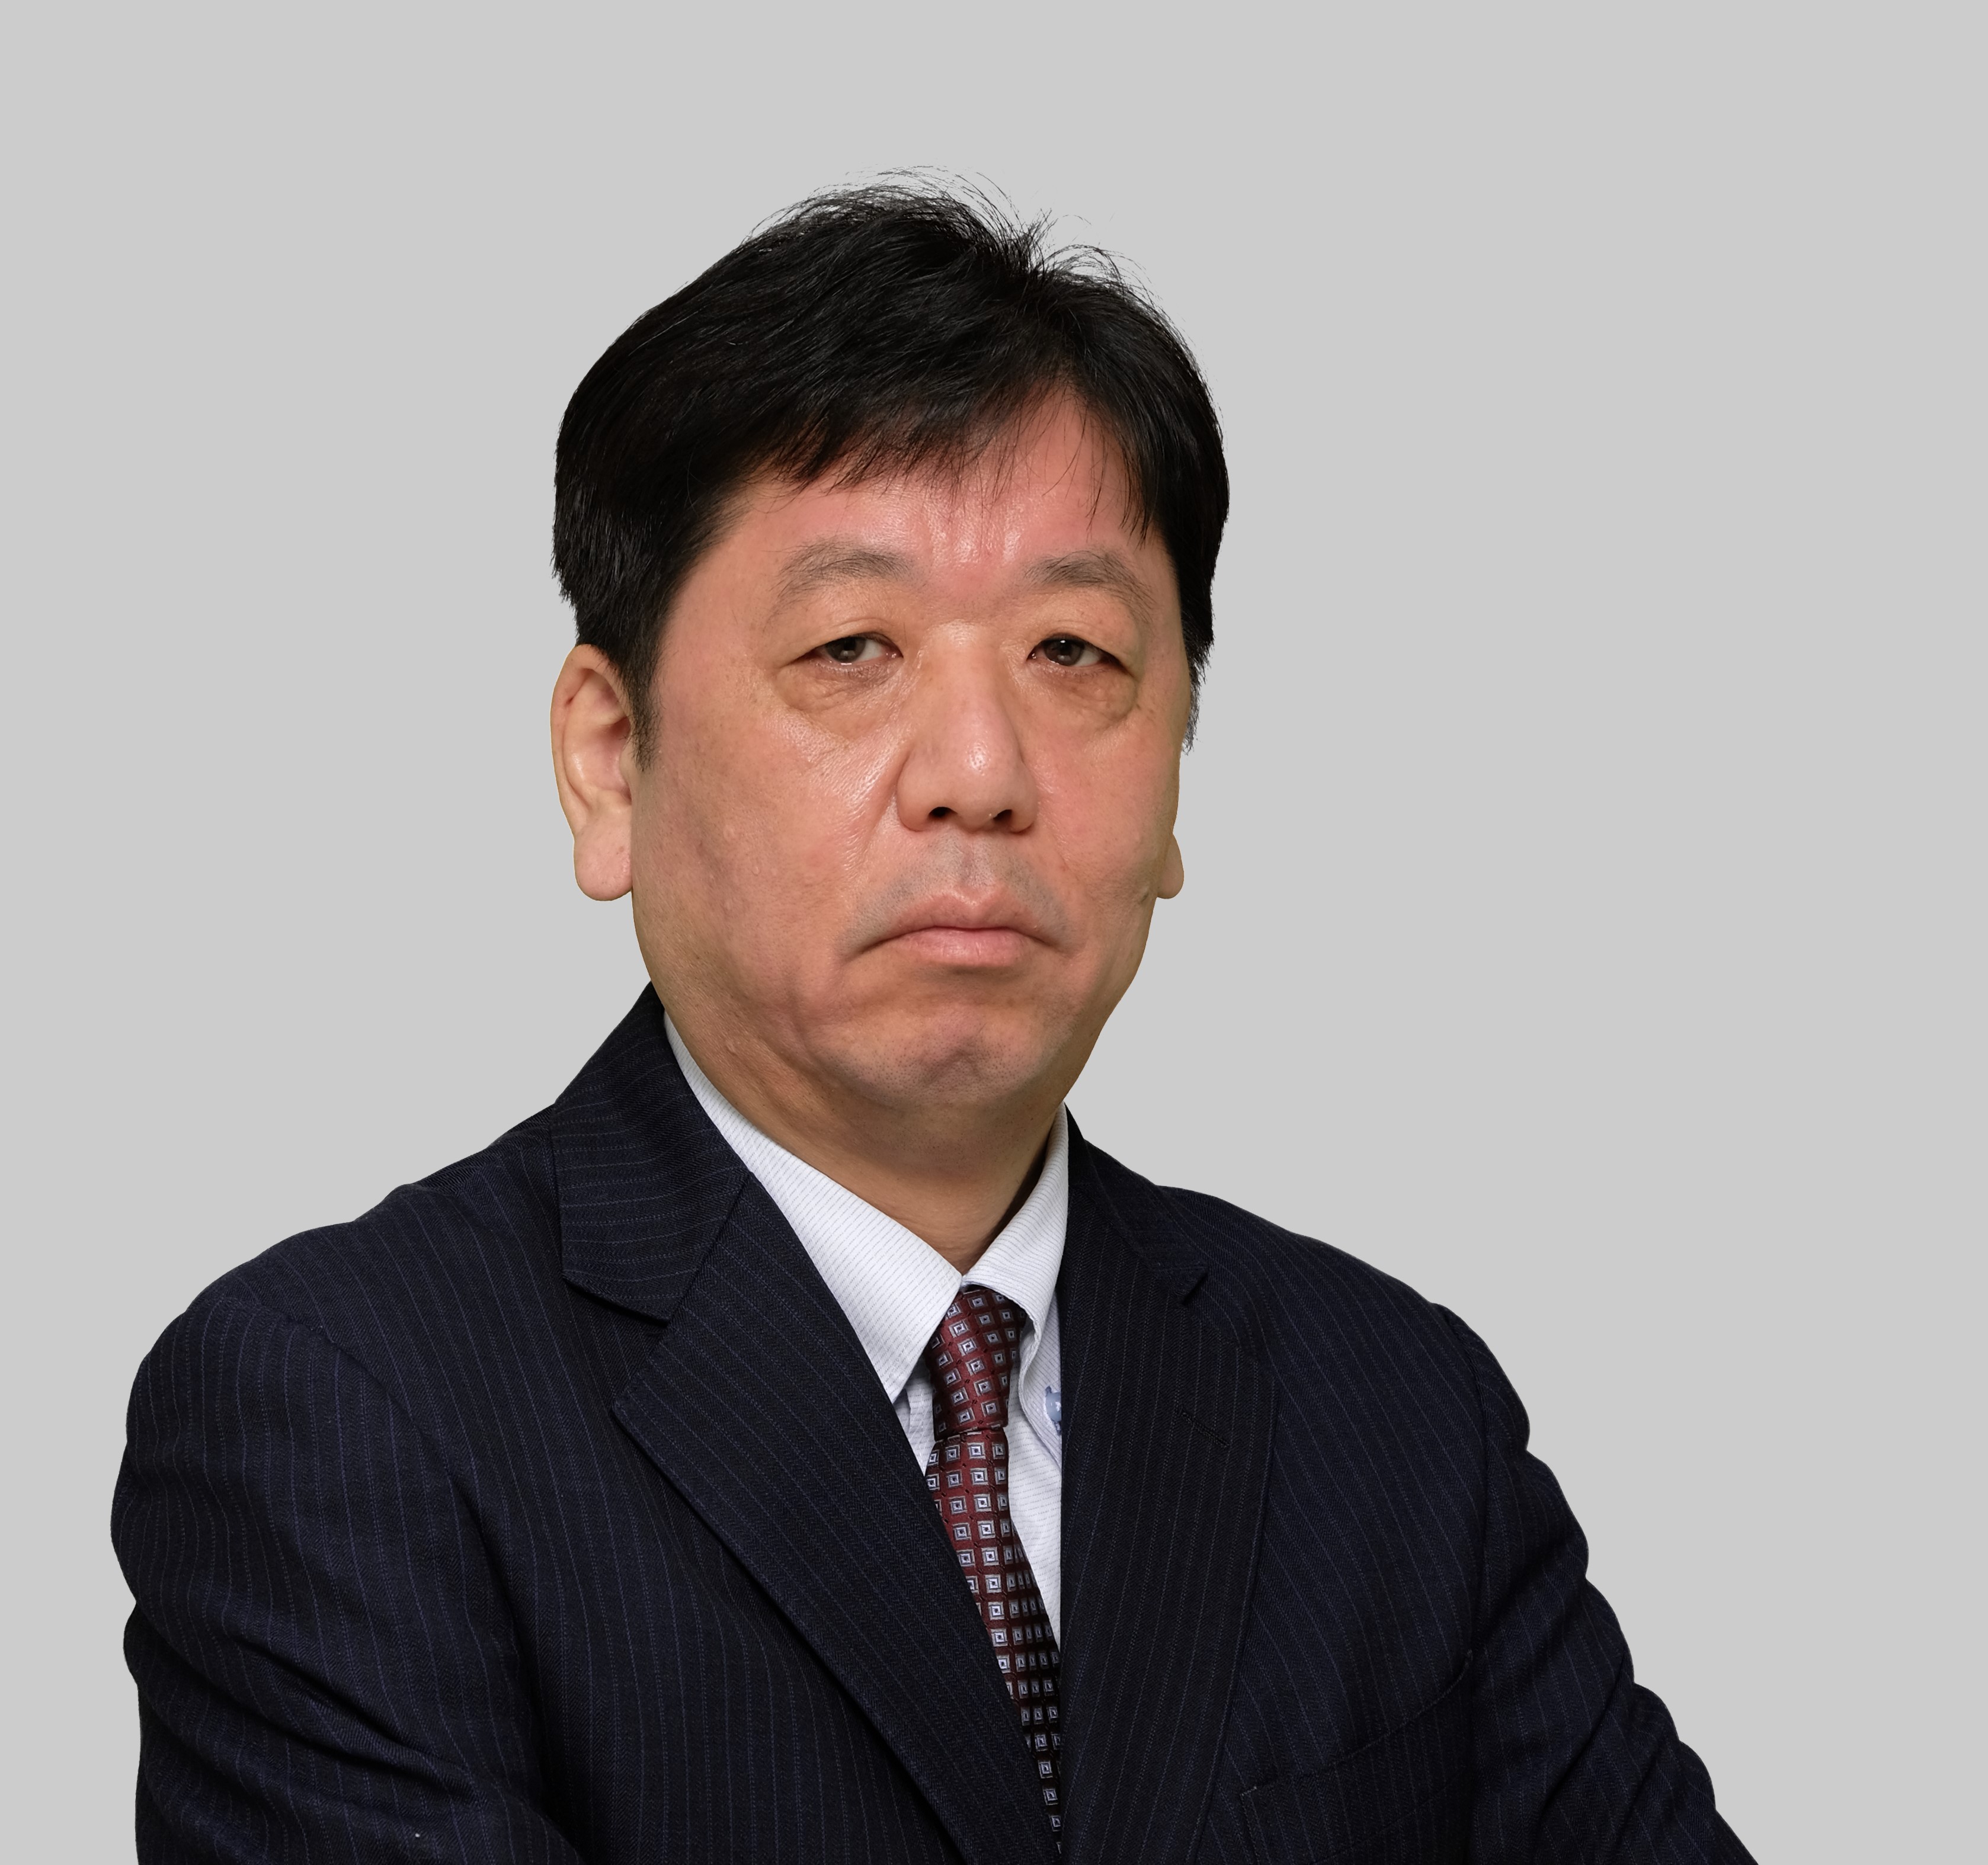 Hidehiko Kakinuma joined Jasmy from AEON Bank, the issuer of the